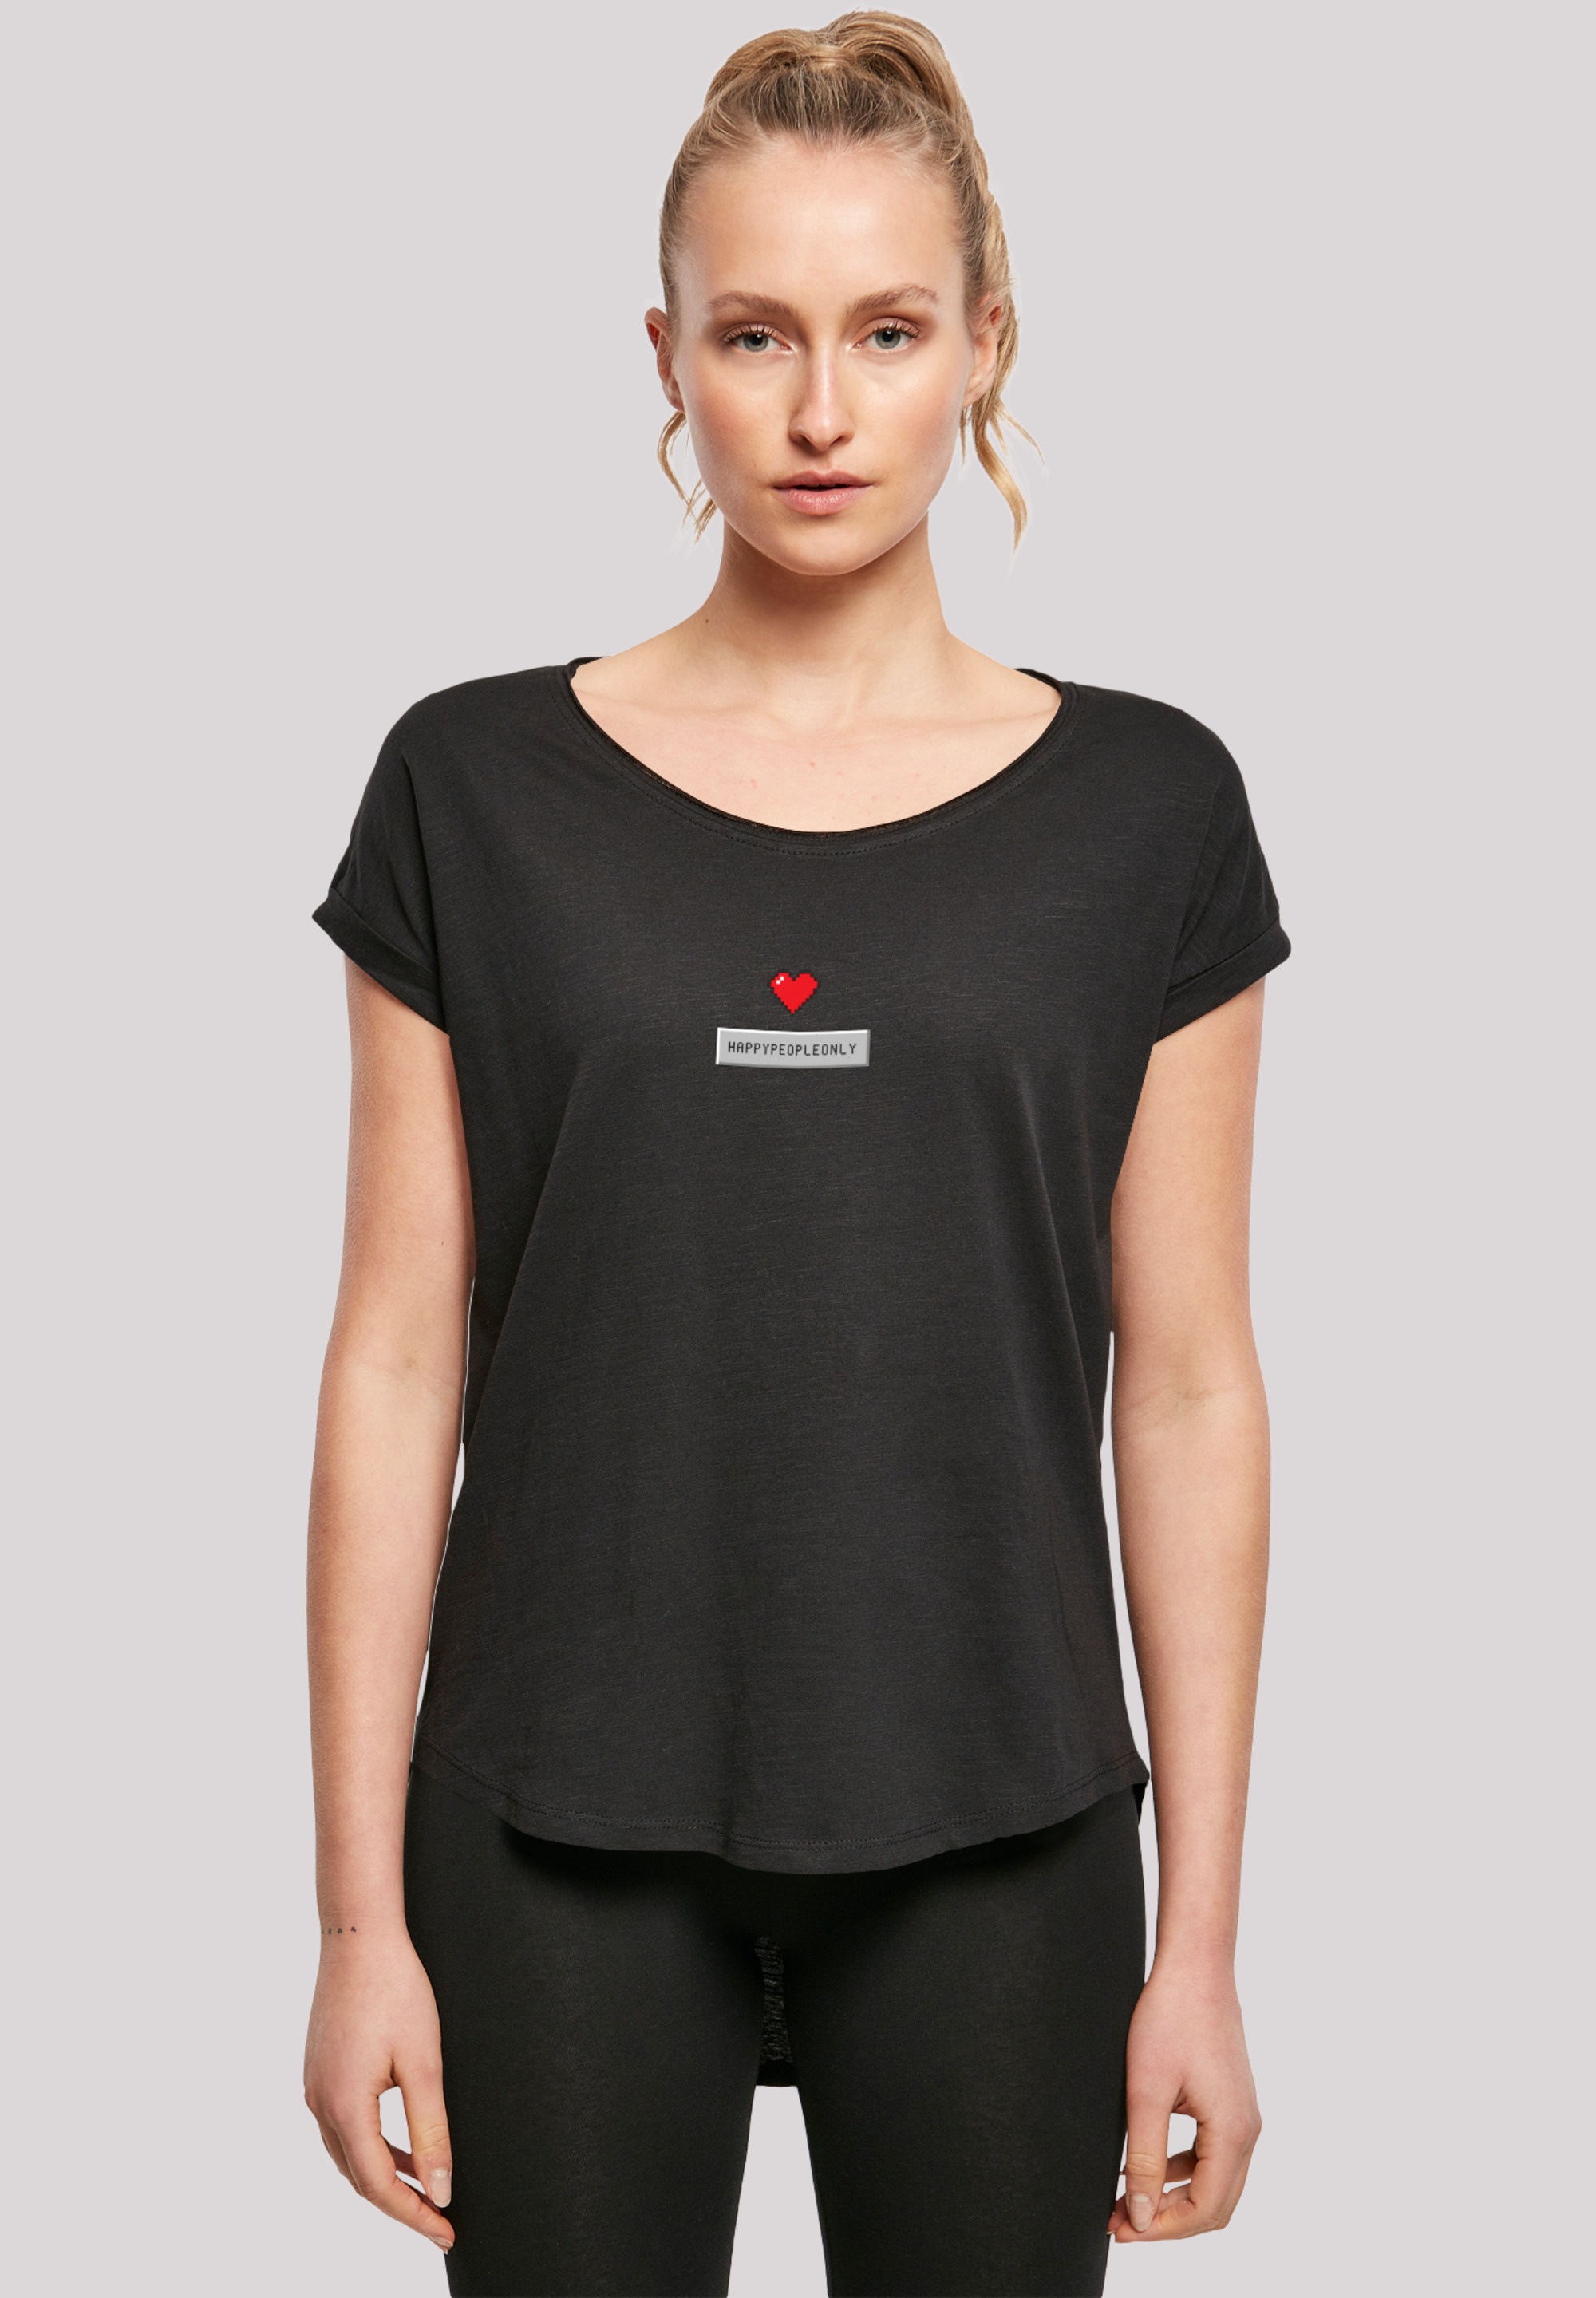 shoppen Print New Happy F4NT4STIC Year »Pixel Silvester«, T-Shirt Herz